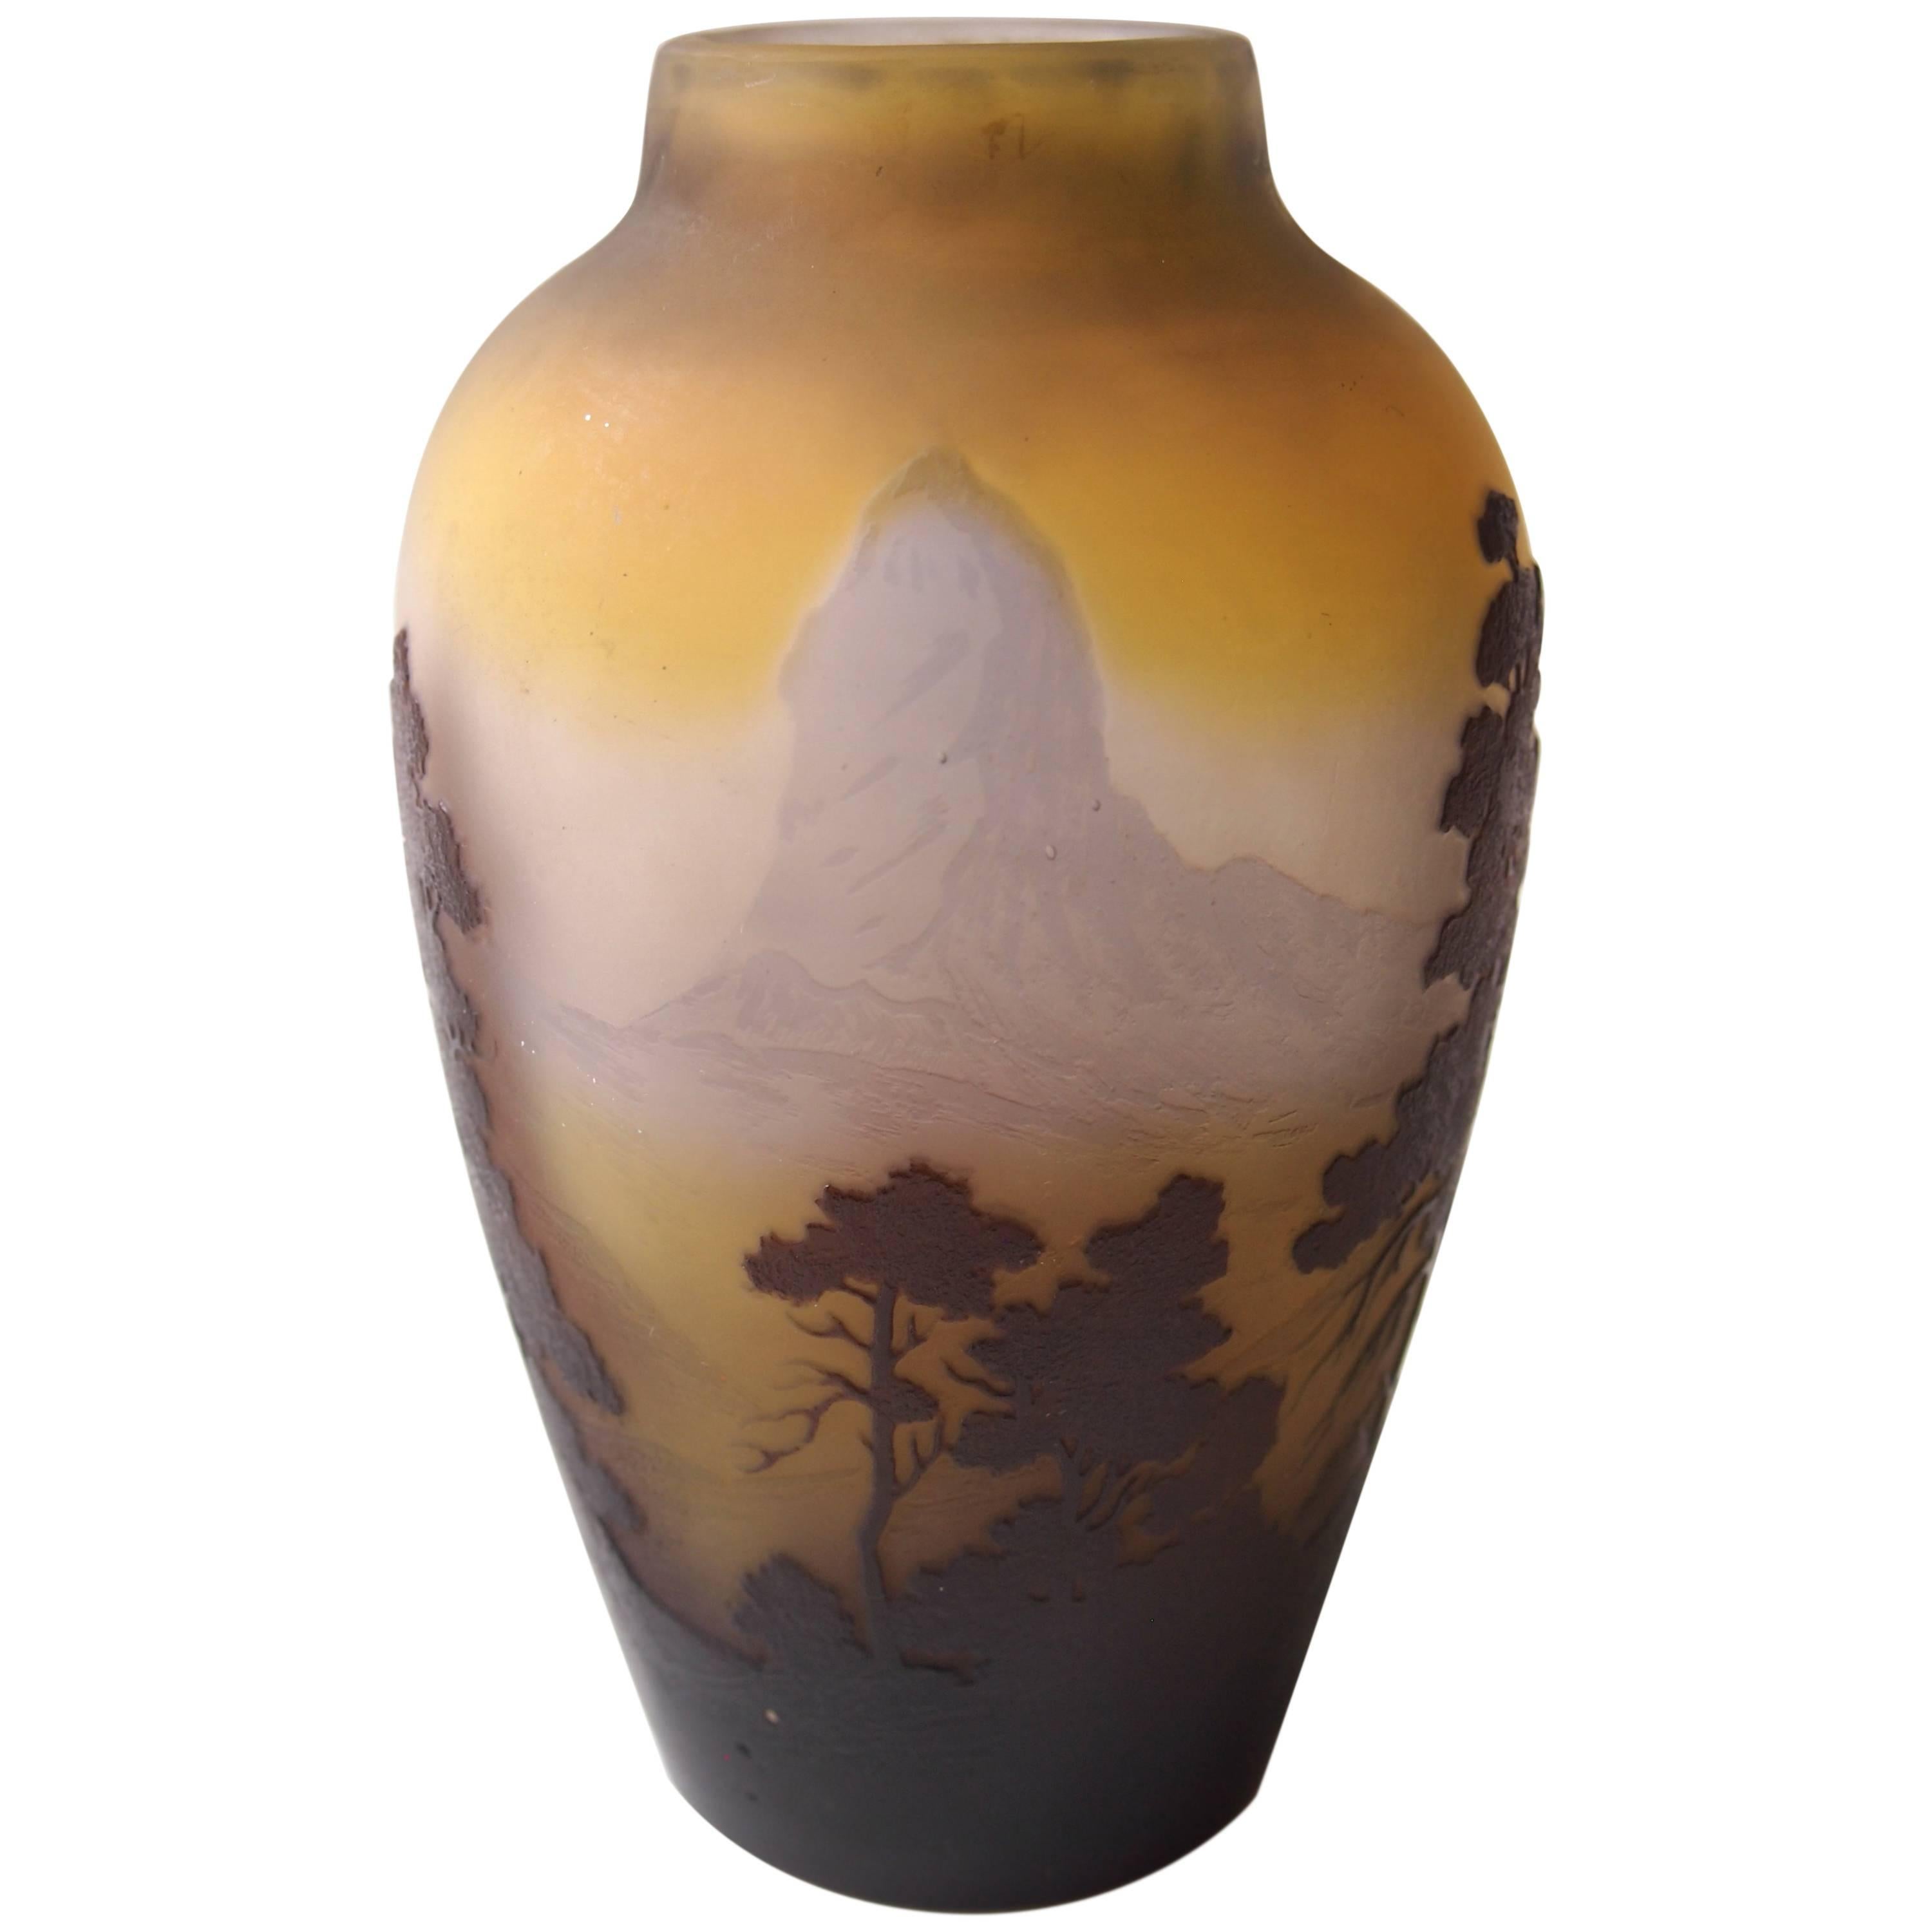 Emile Galle Art Nouveau Cameo Matterhorn Vase, Signed, circa 1900